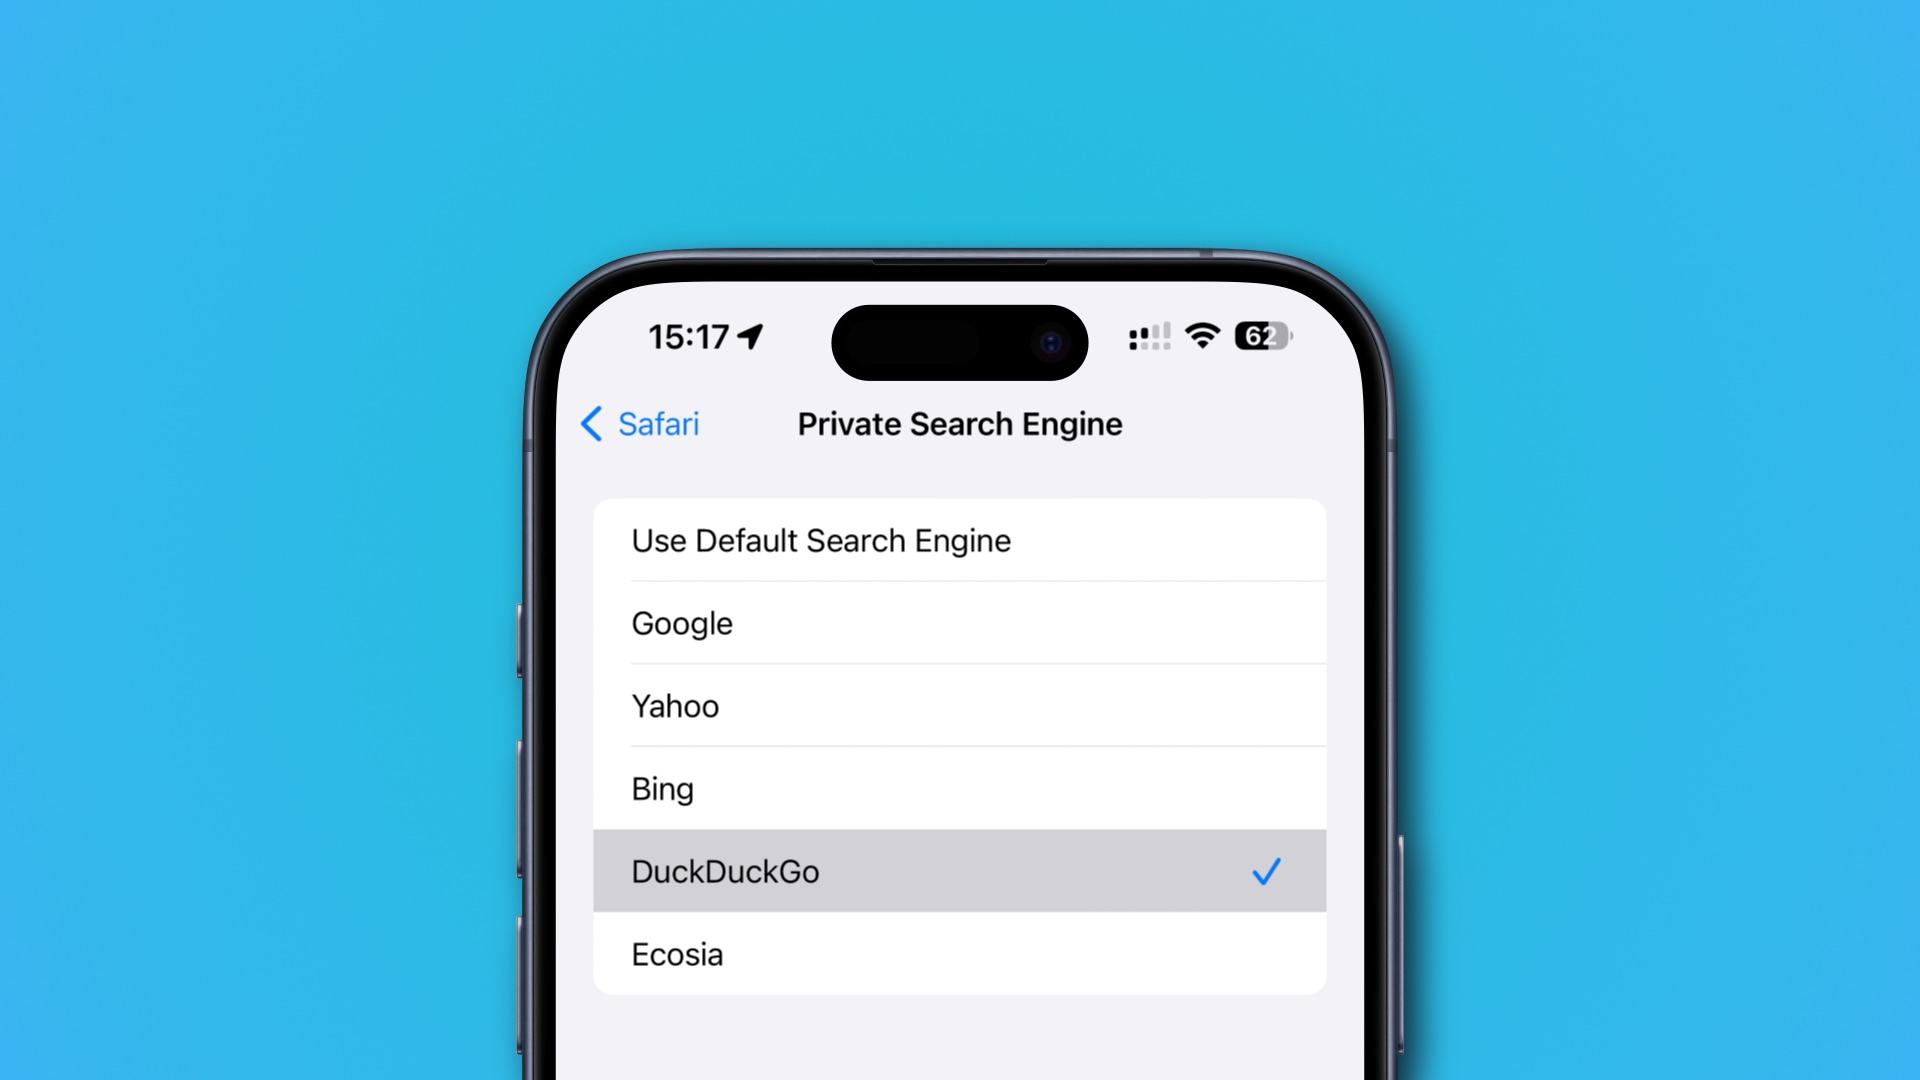 Choosing DuckDuckGo as Safari's private search engine on iOS 17